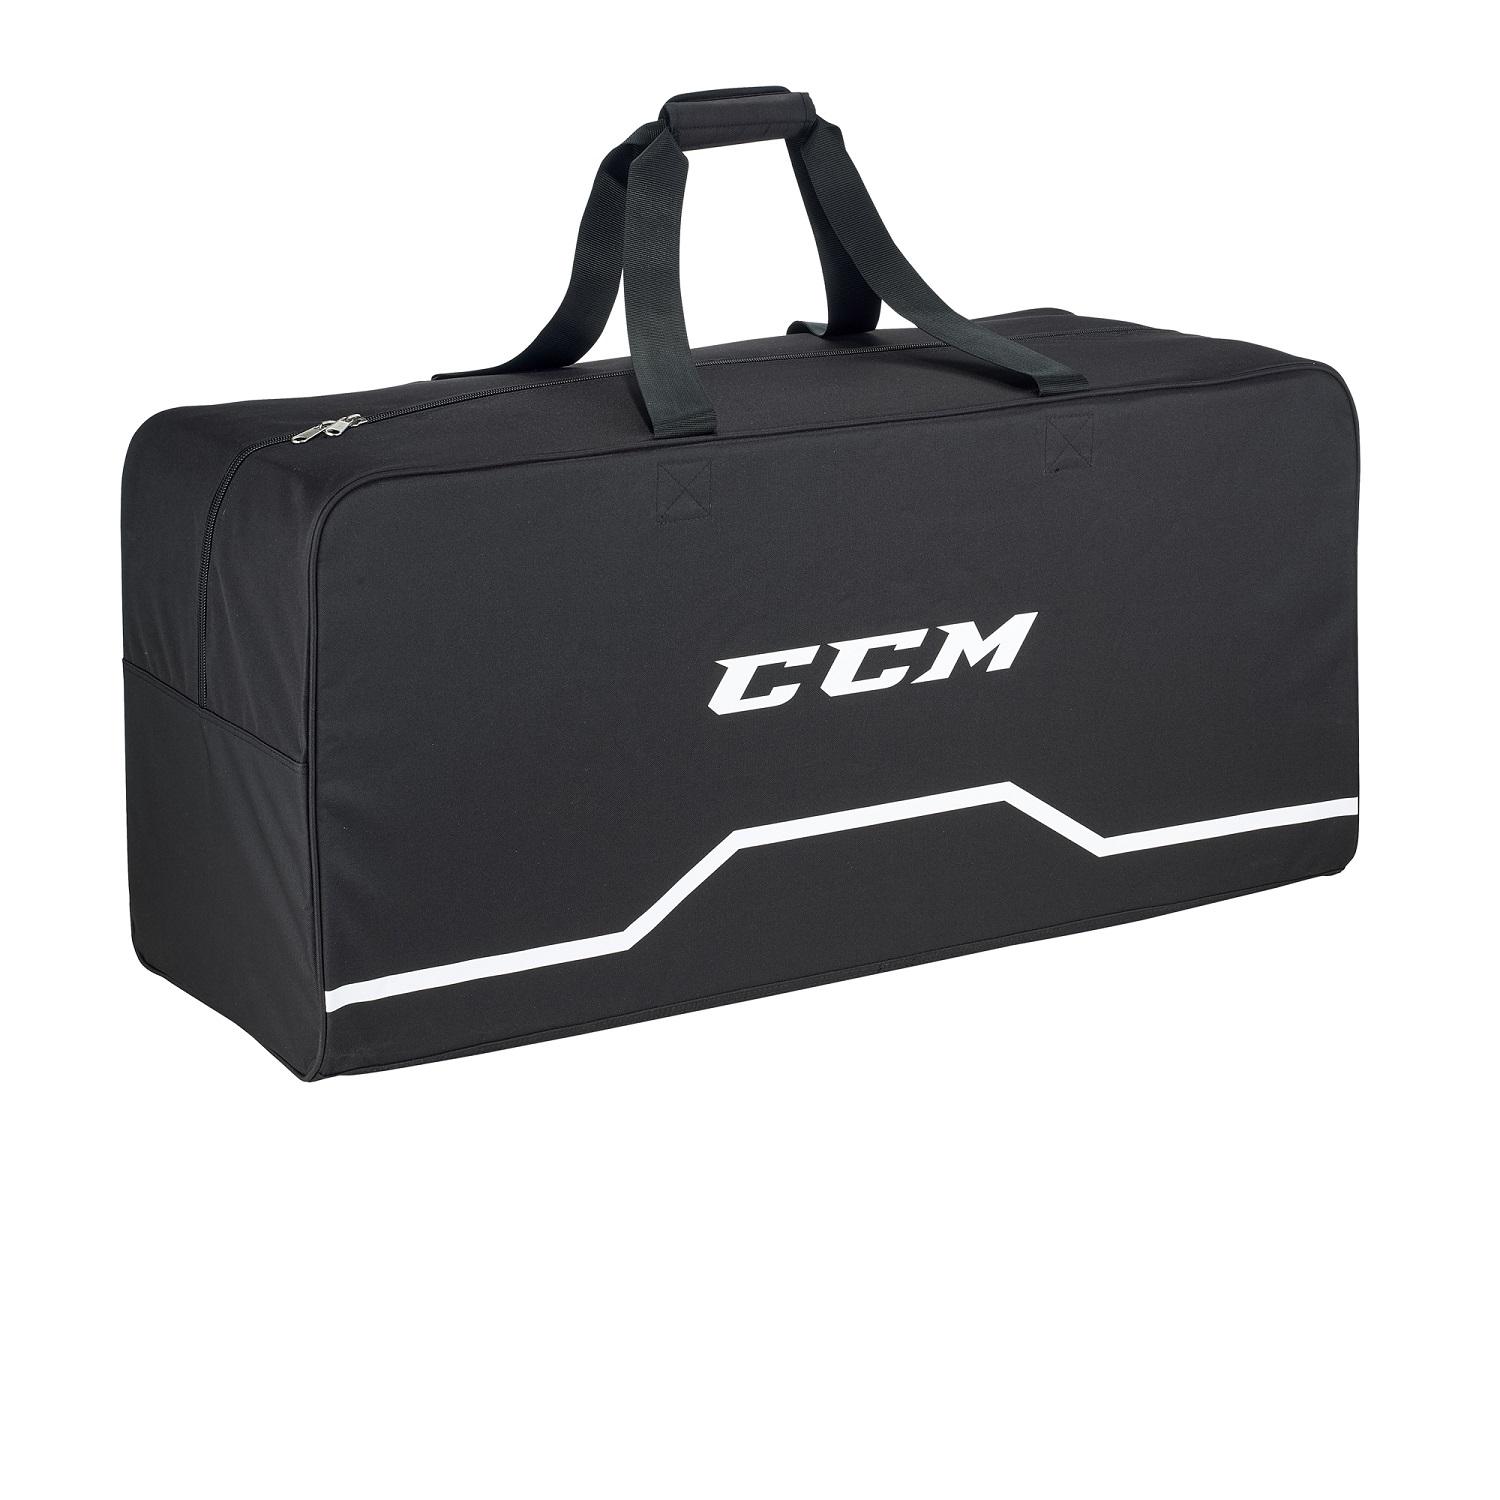 CCM Ebp 310 Bag